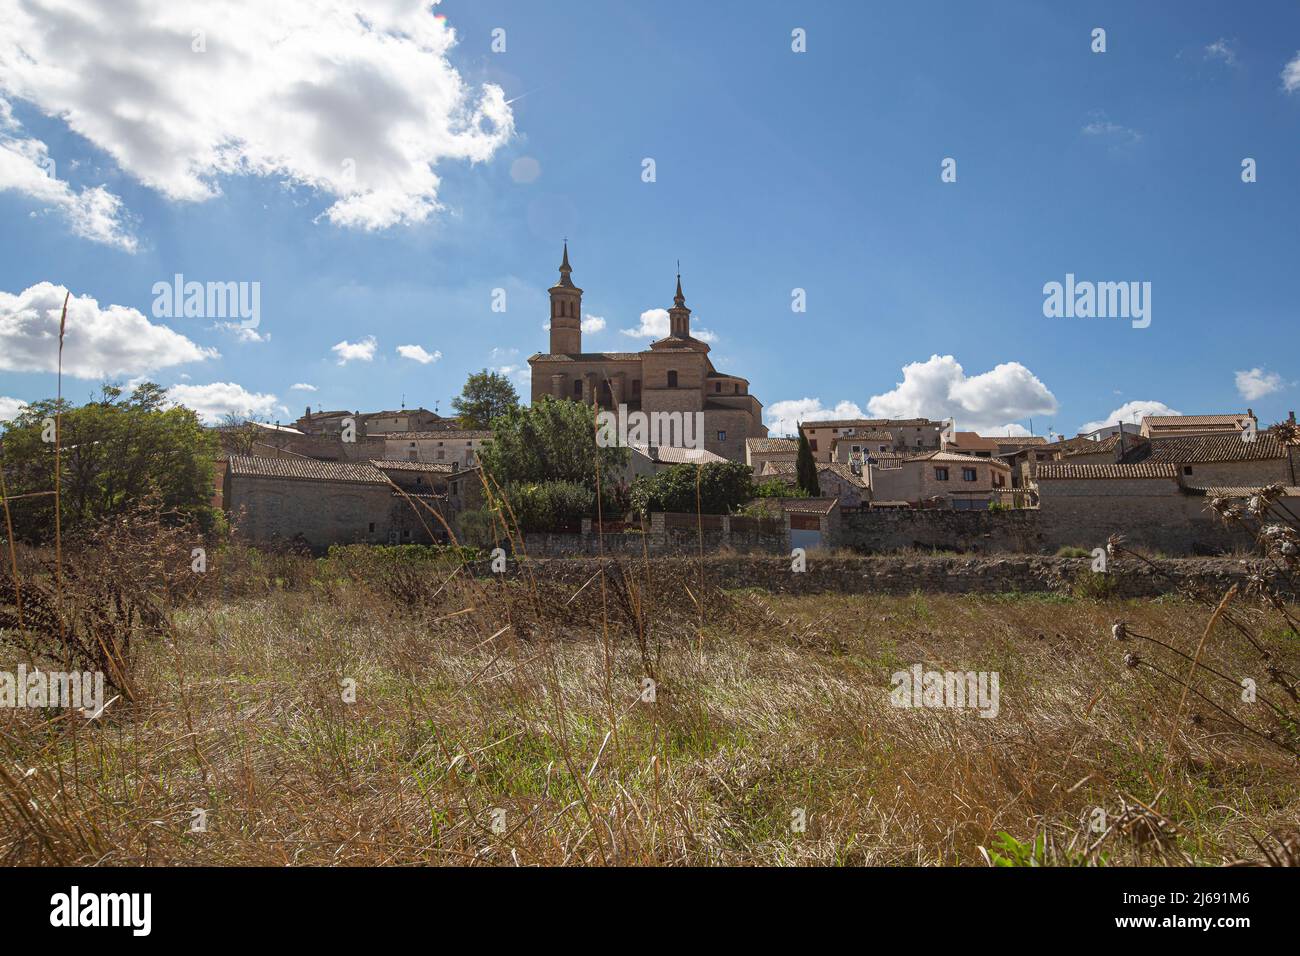 Landscape of the town of Fuendetodos, birthplace of the Spanish painter Francisco De Goya, Zaragoza province, Autonomous Community of Aragon, Spain Stock Photo